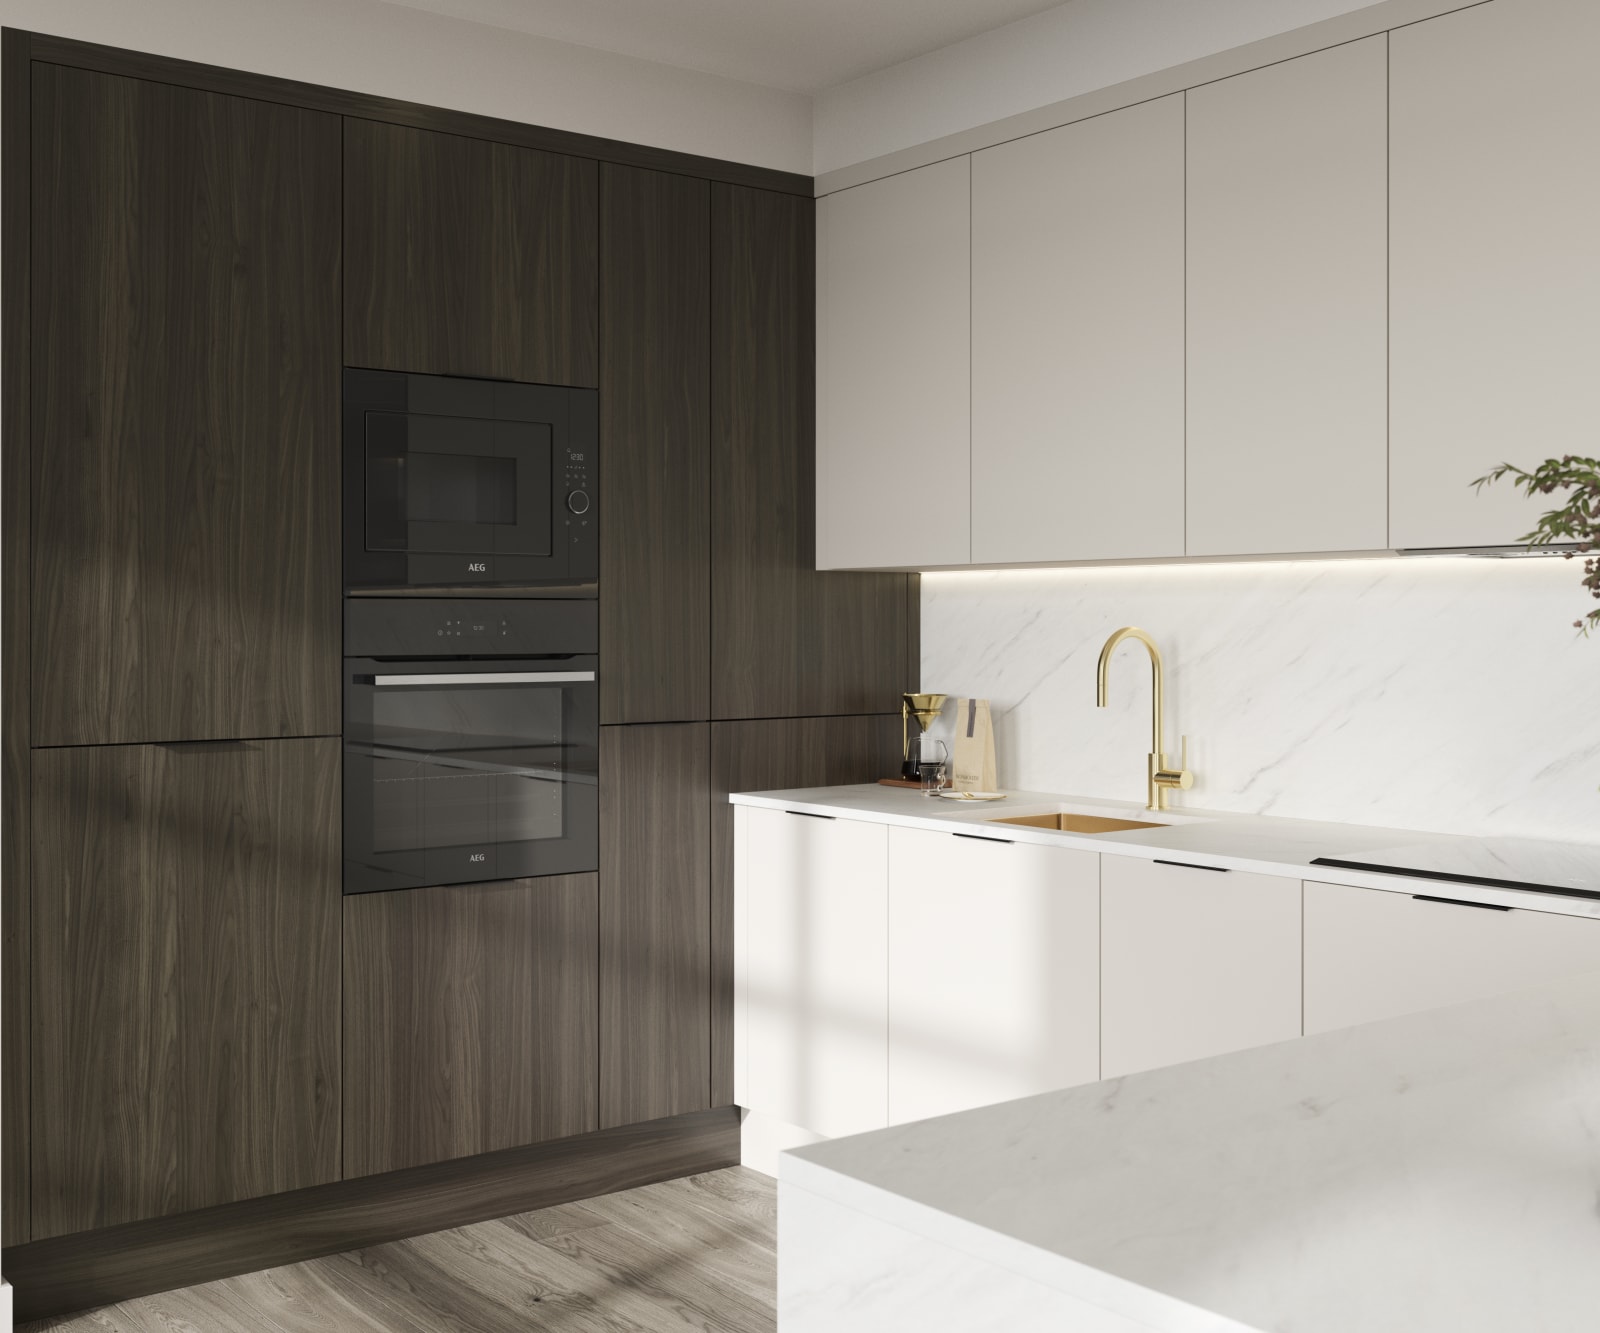 Modern kitchen design with a lightweight wood-effect finish